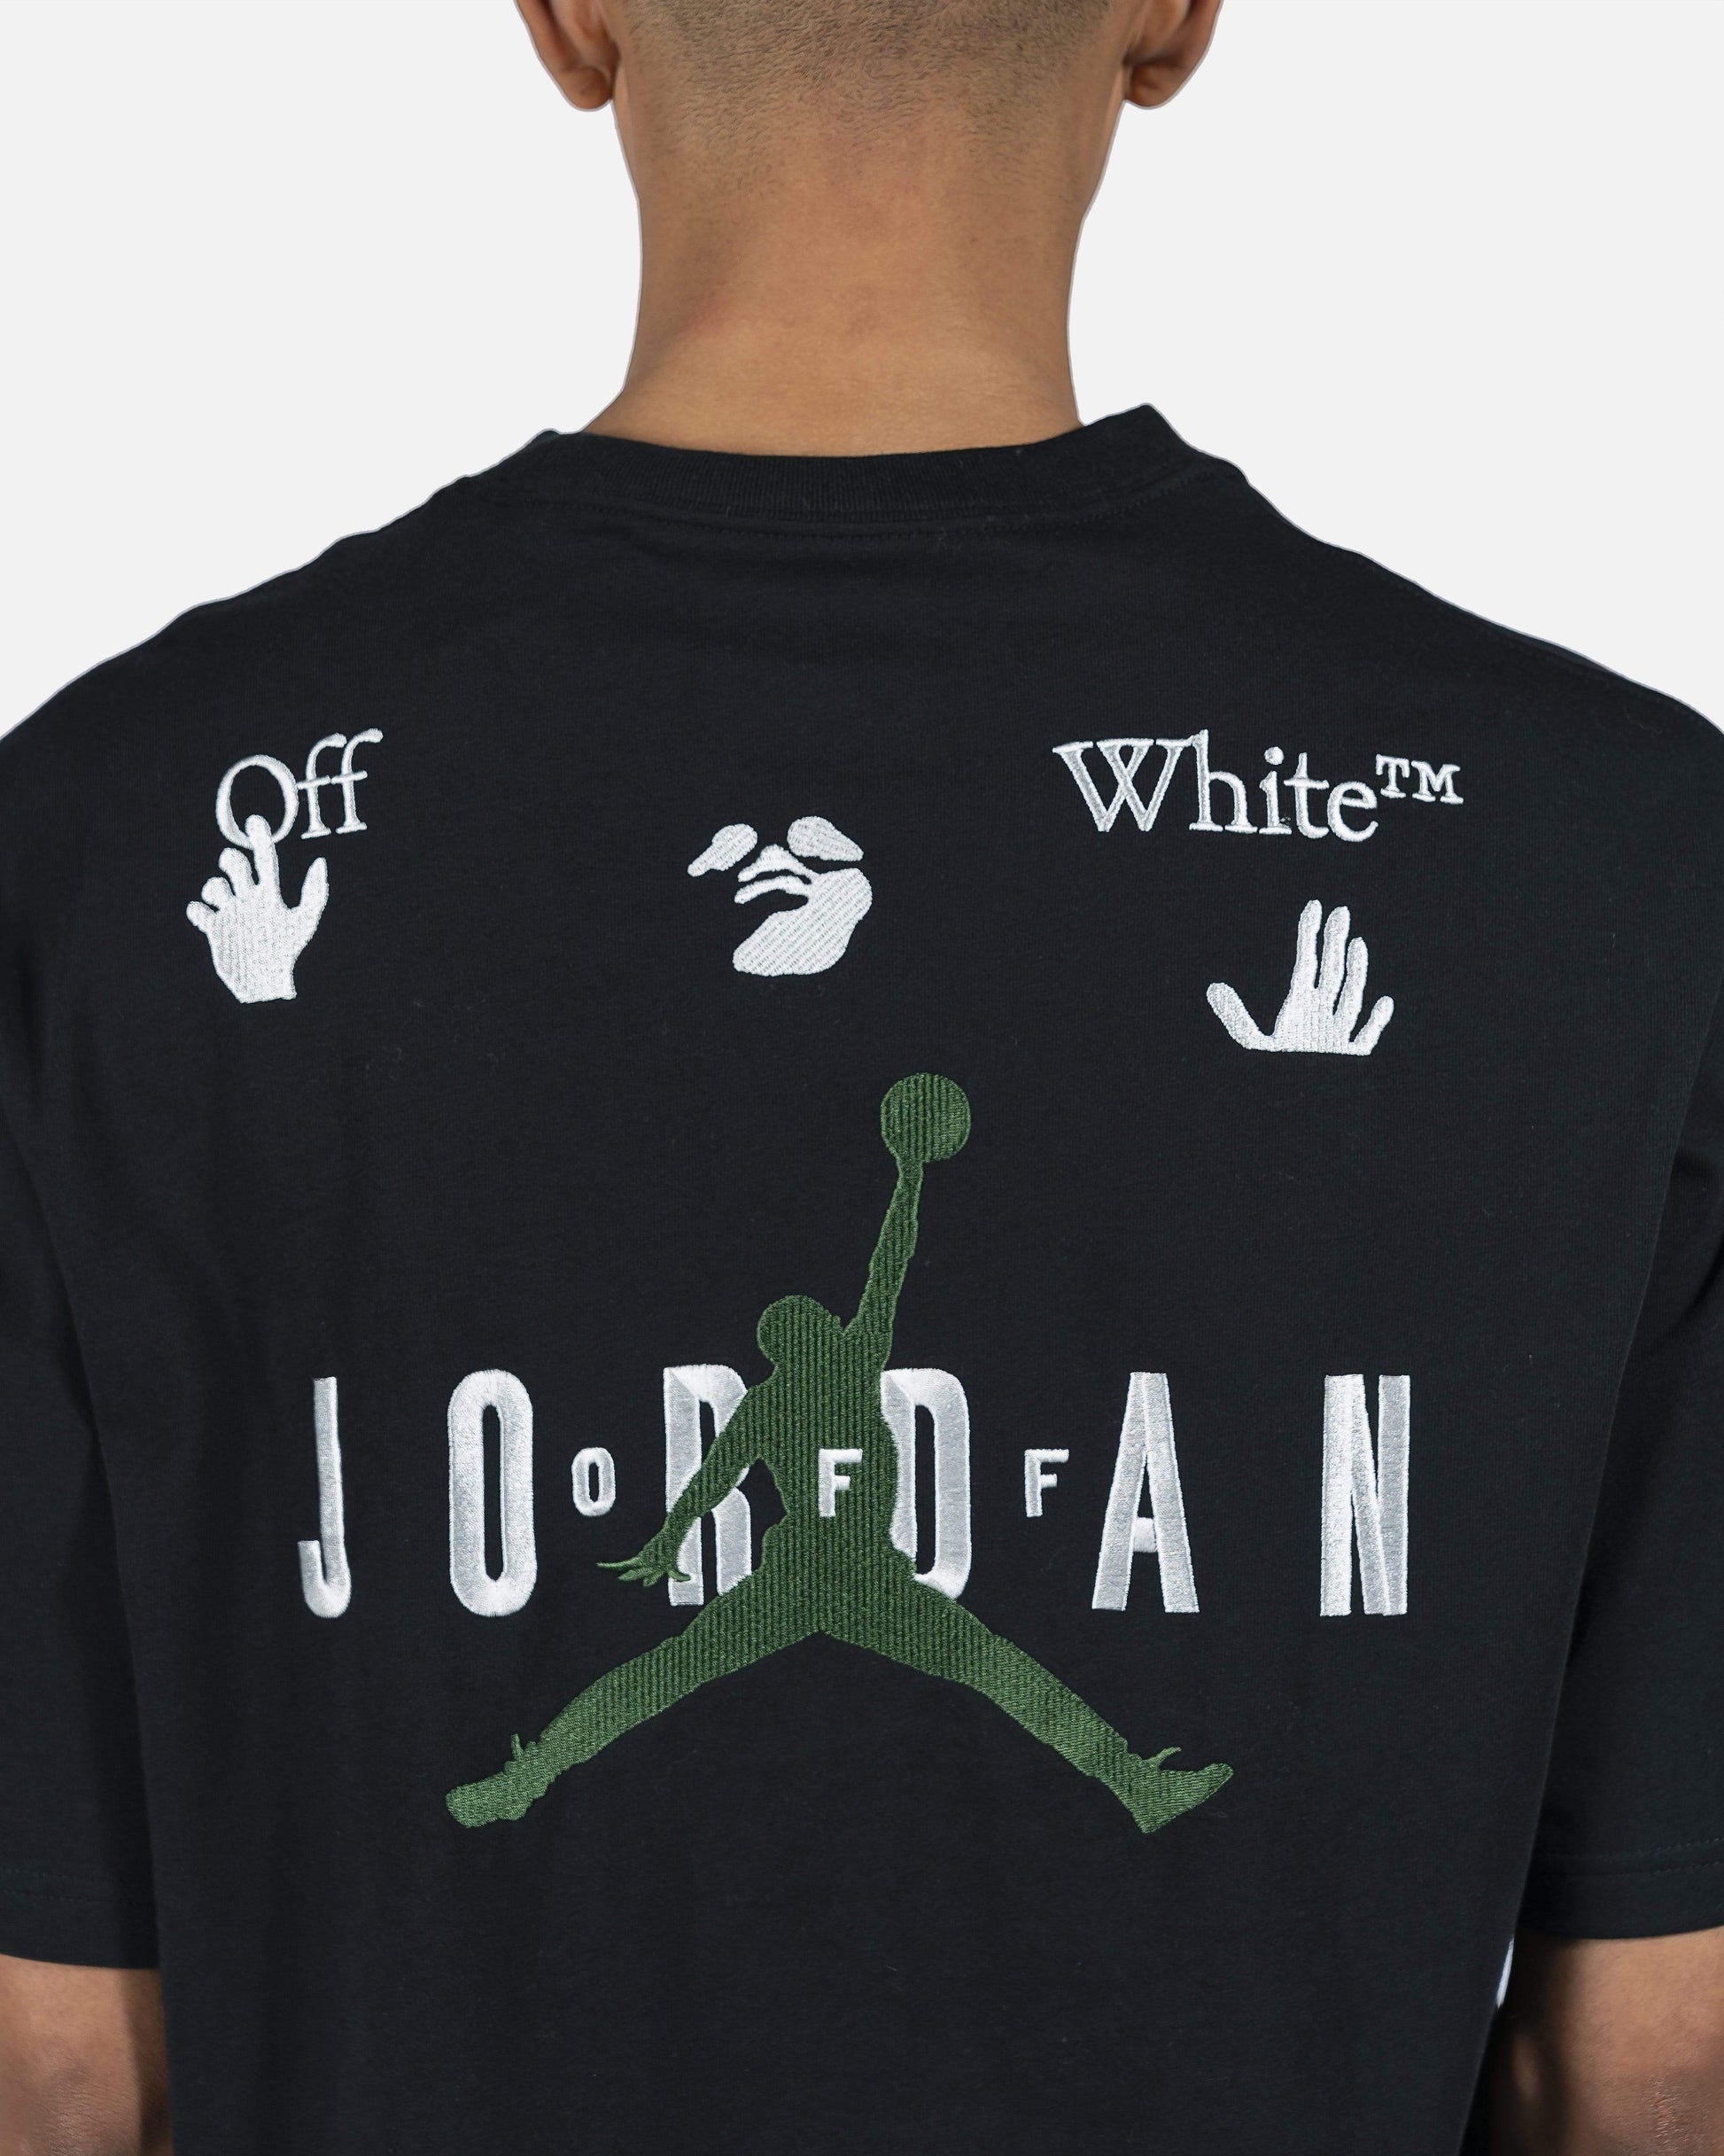 JORDAN Men's T-Shirts Off-White Shortsleeve Tee in Black